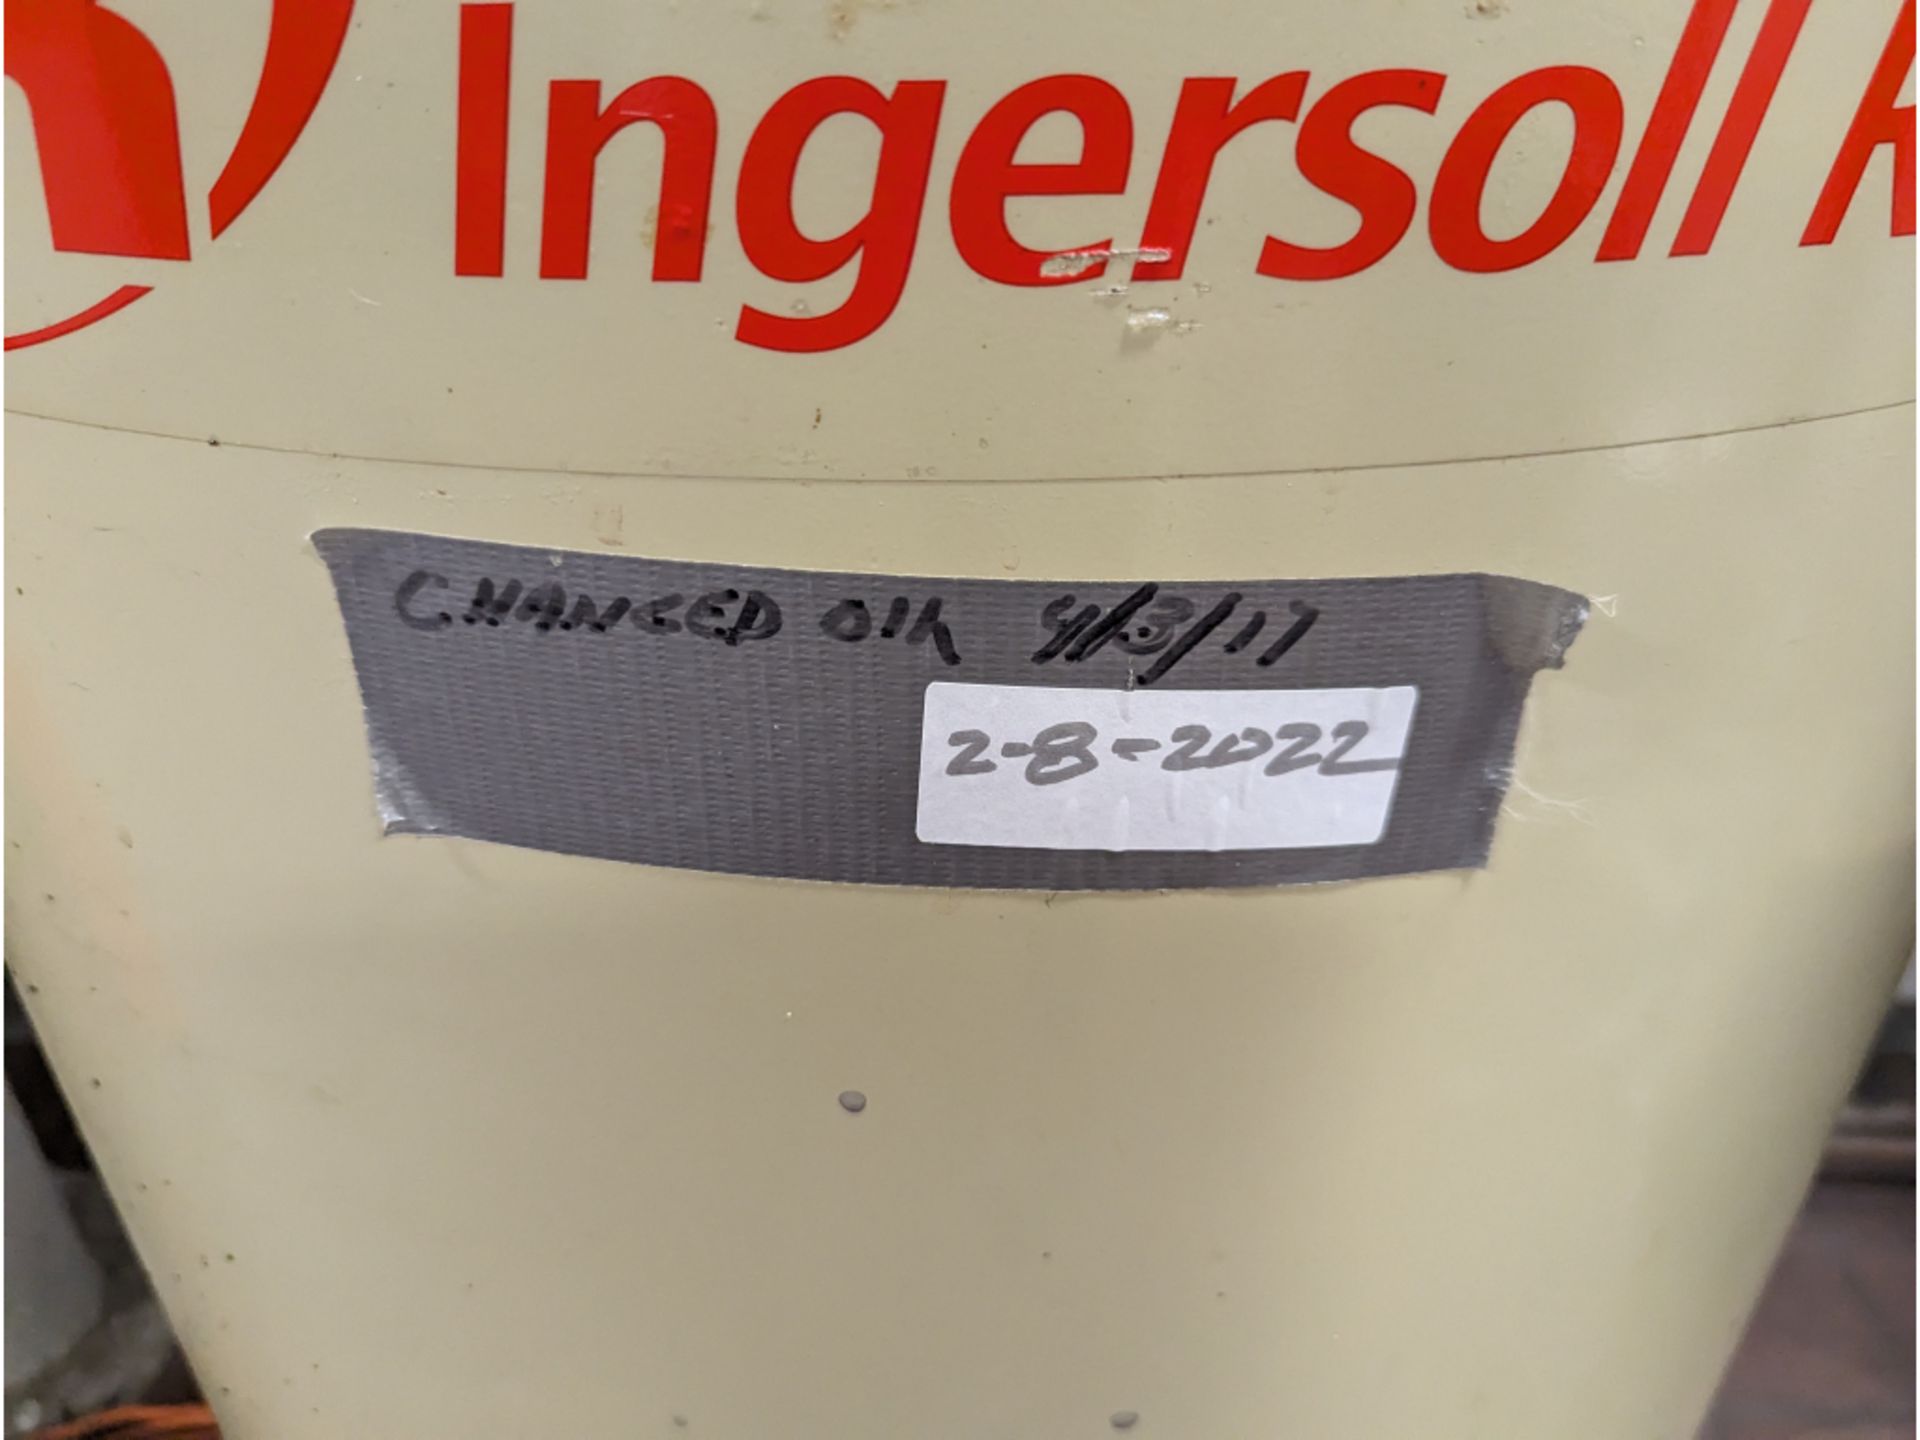 Ingersoll Rand 80 Gallon Air Compressor - Image 4 of 7